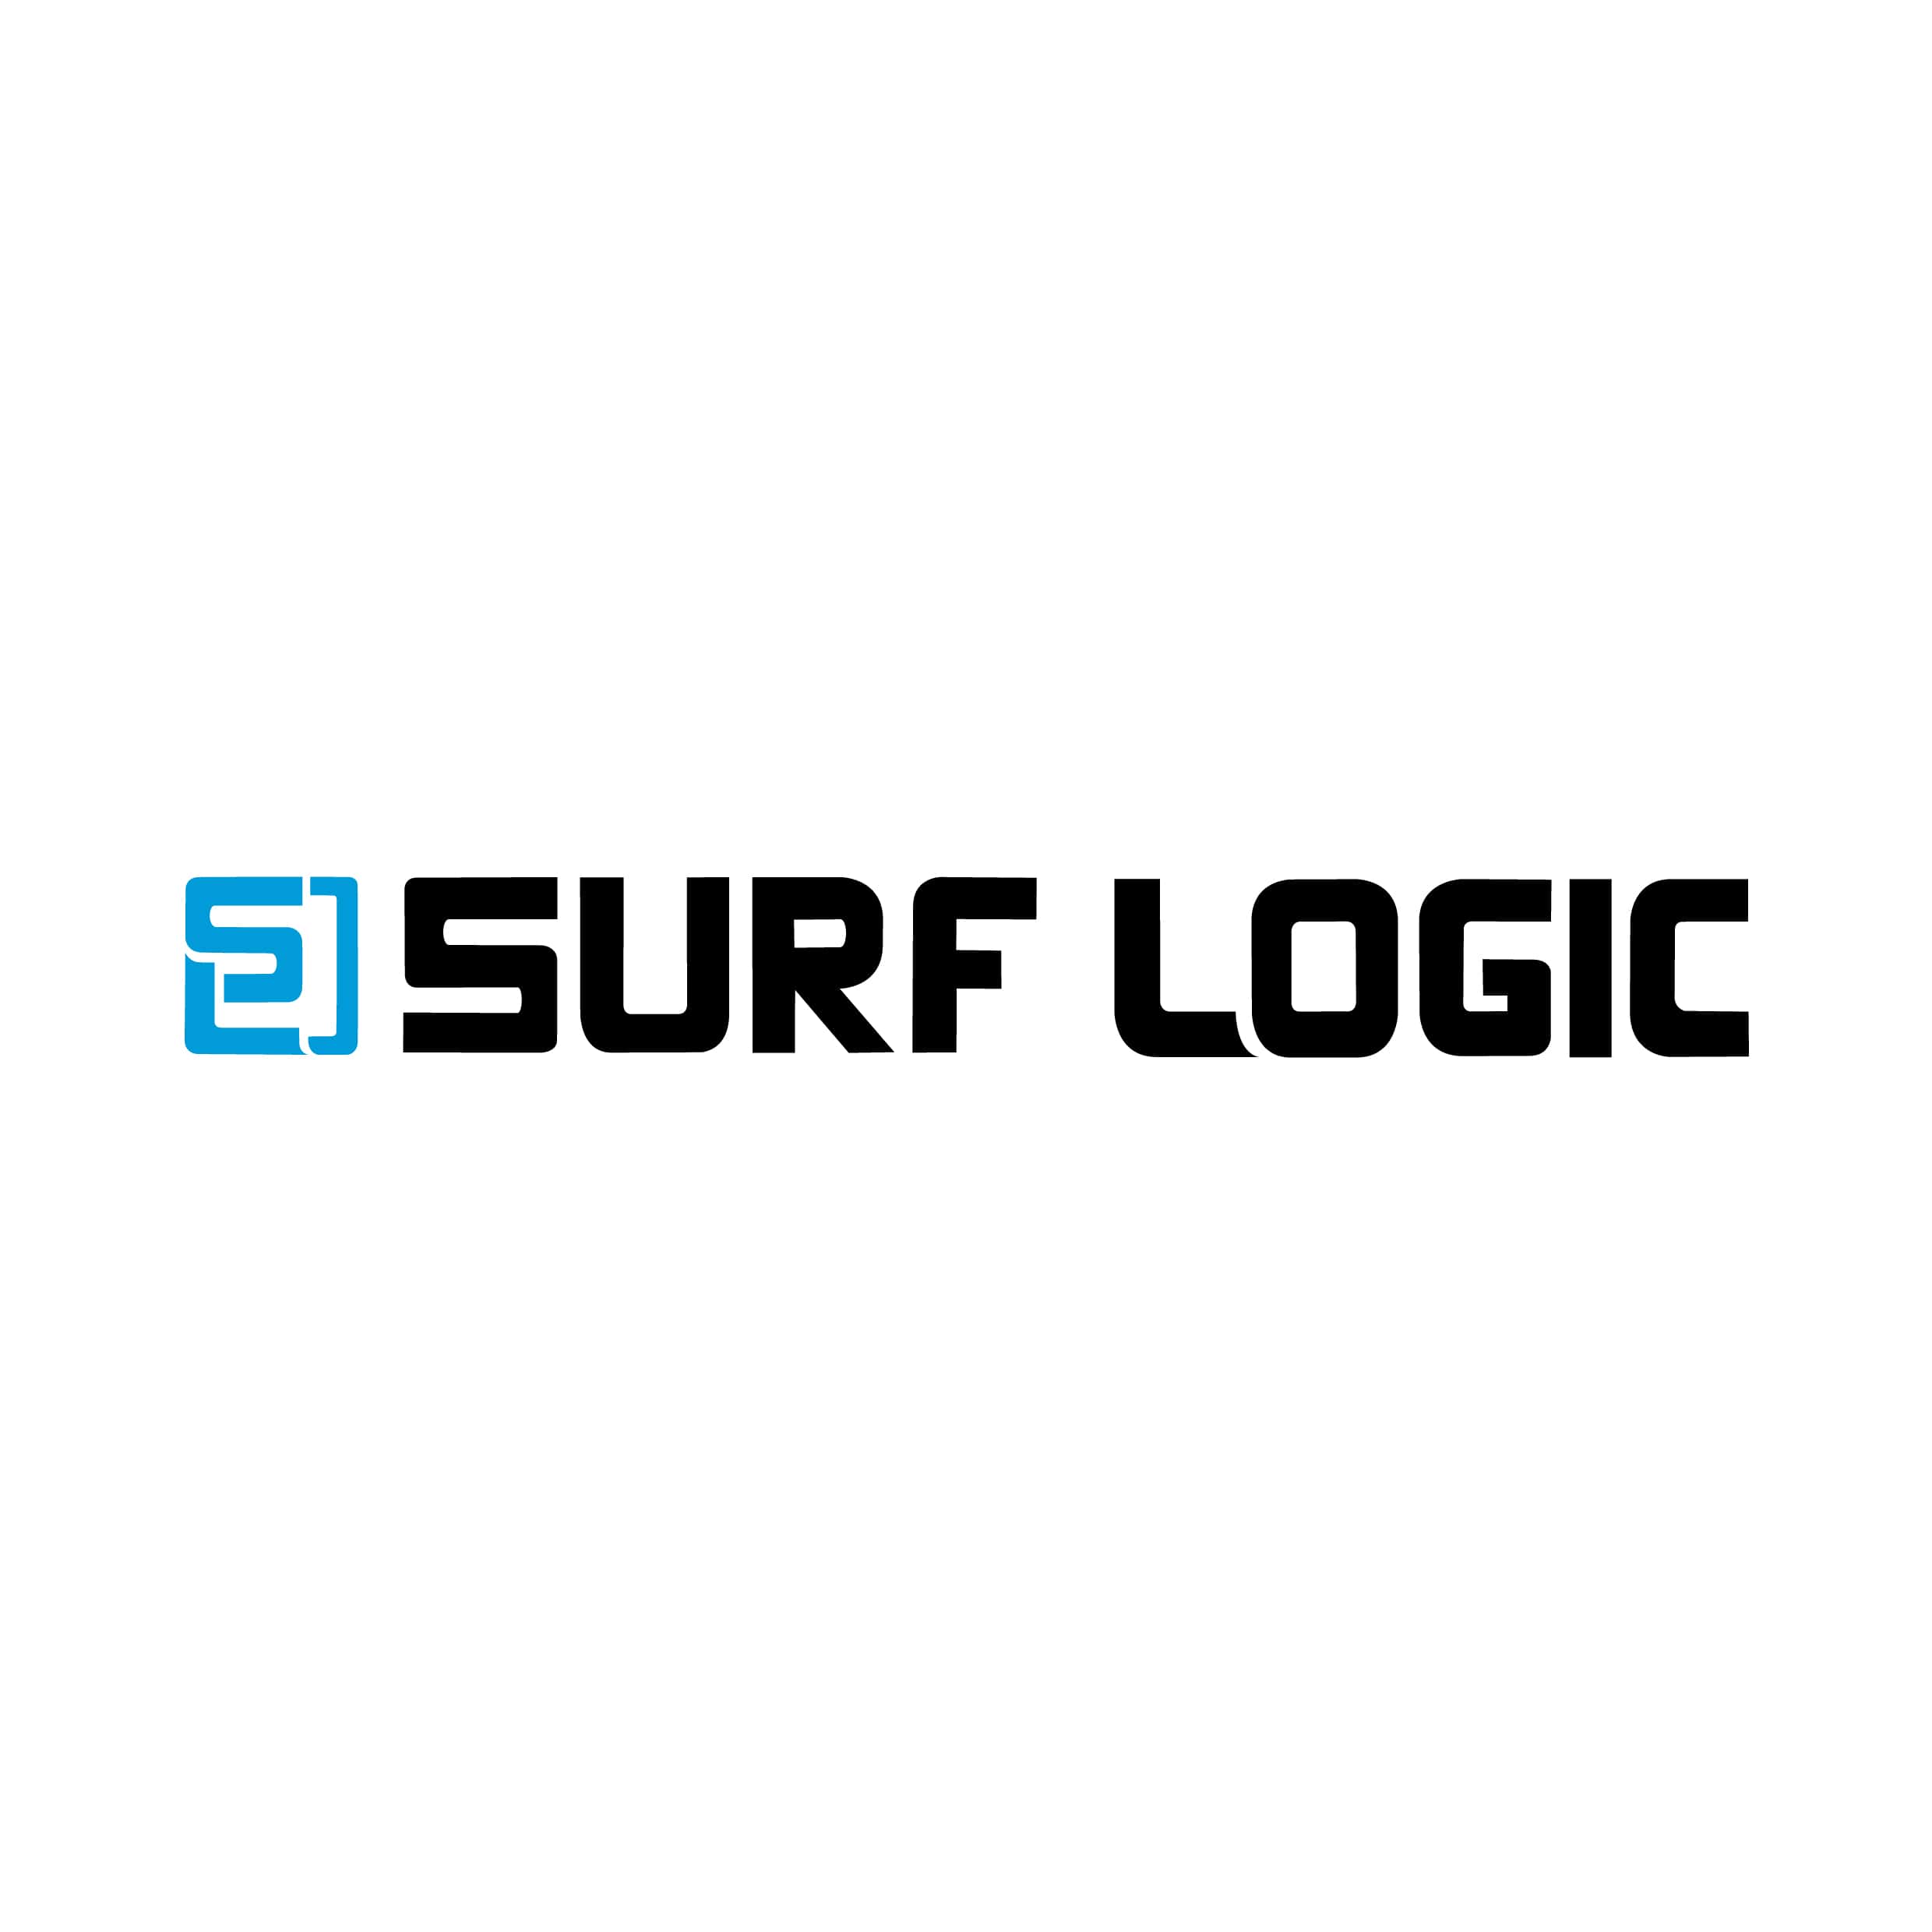 stickers-surf-logic-ref2-autocollant-surf-body-board-sticker-mer-vague-sport-extreme-logo-planche-autocollants-decals-riding-sponsors-min